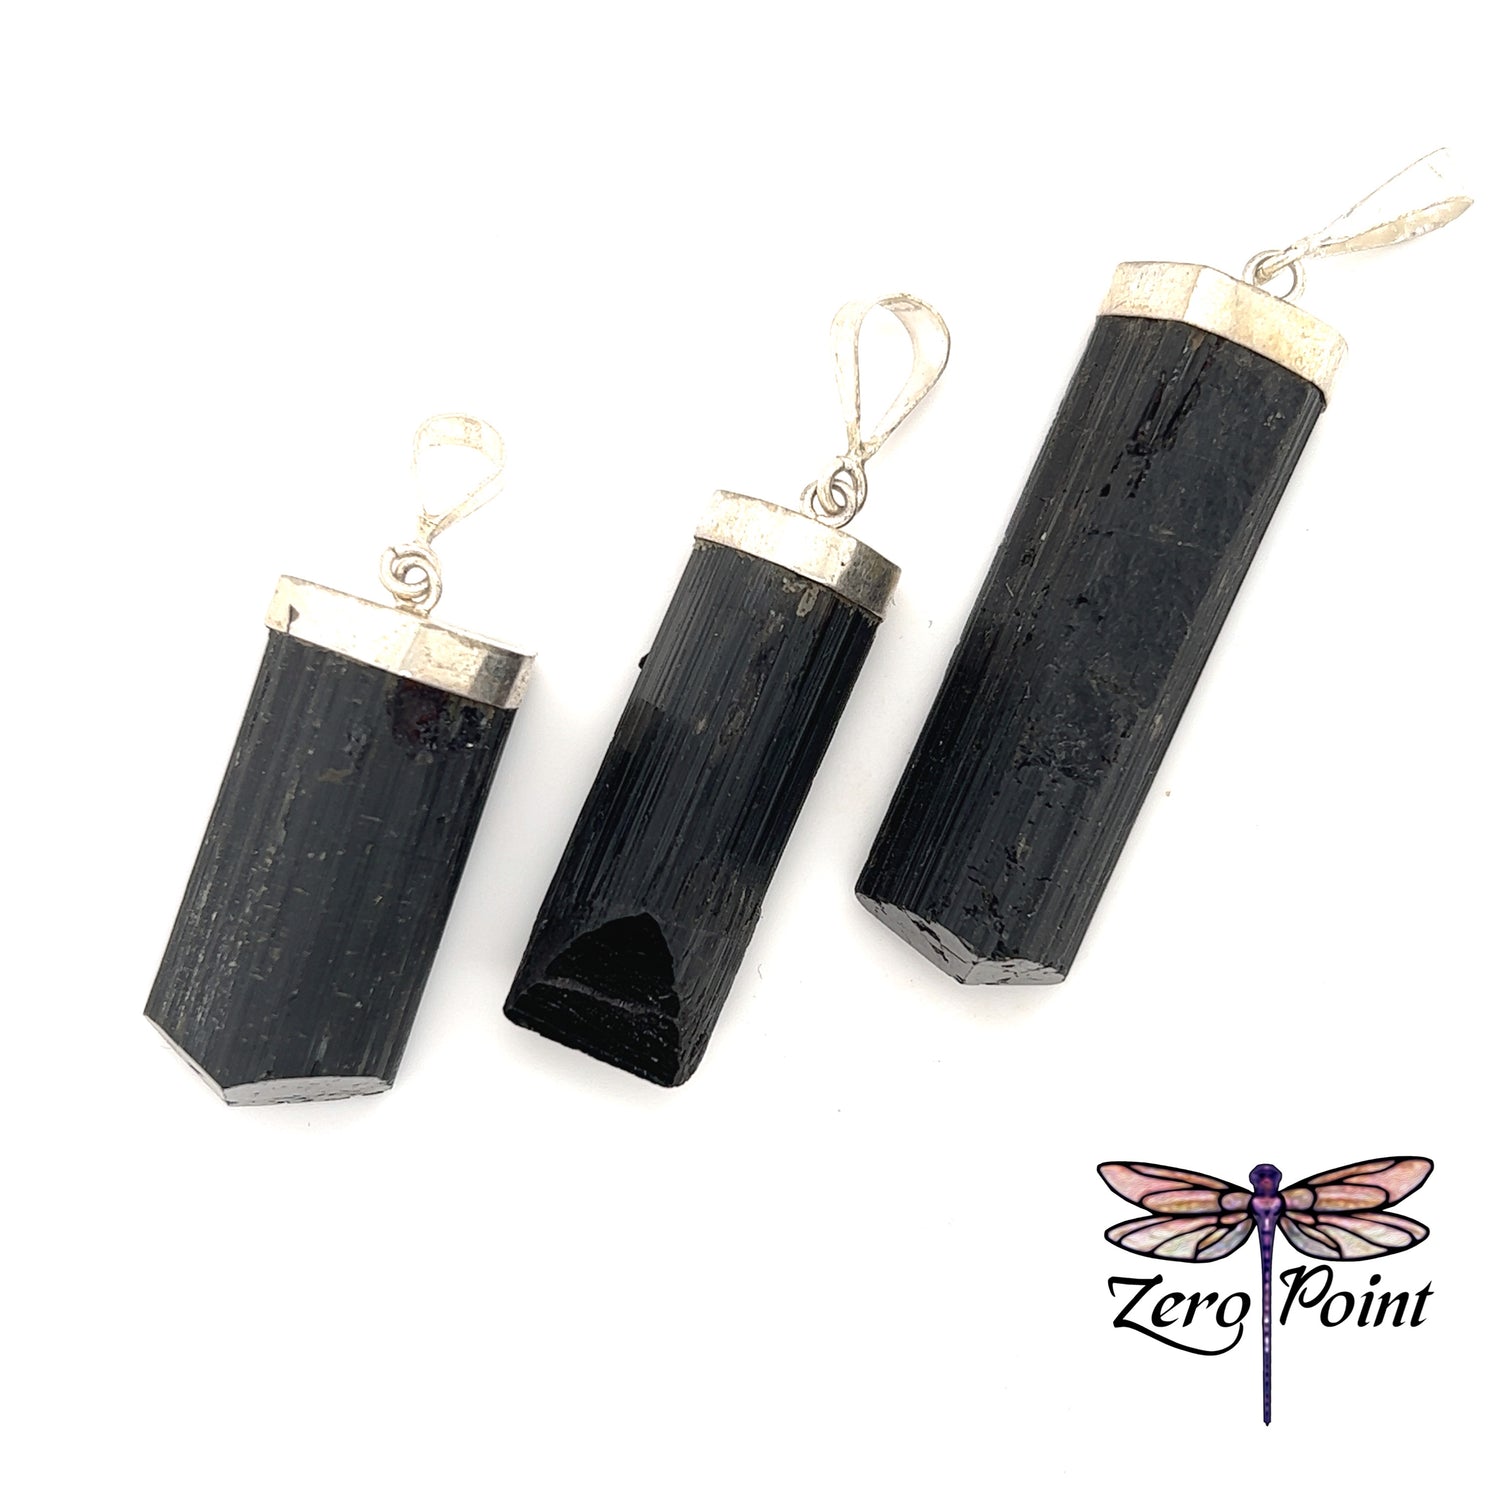 Black Tourmaline Pendant #3107 - Zero Point Crystals